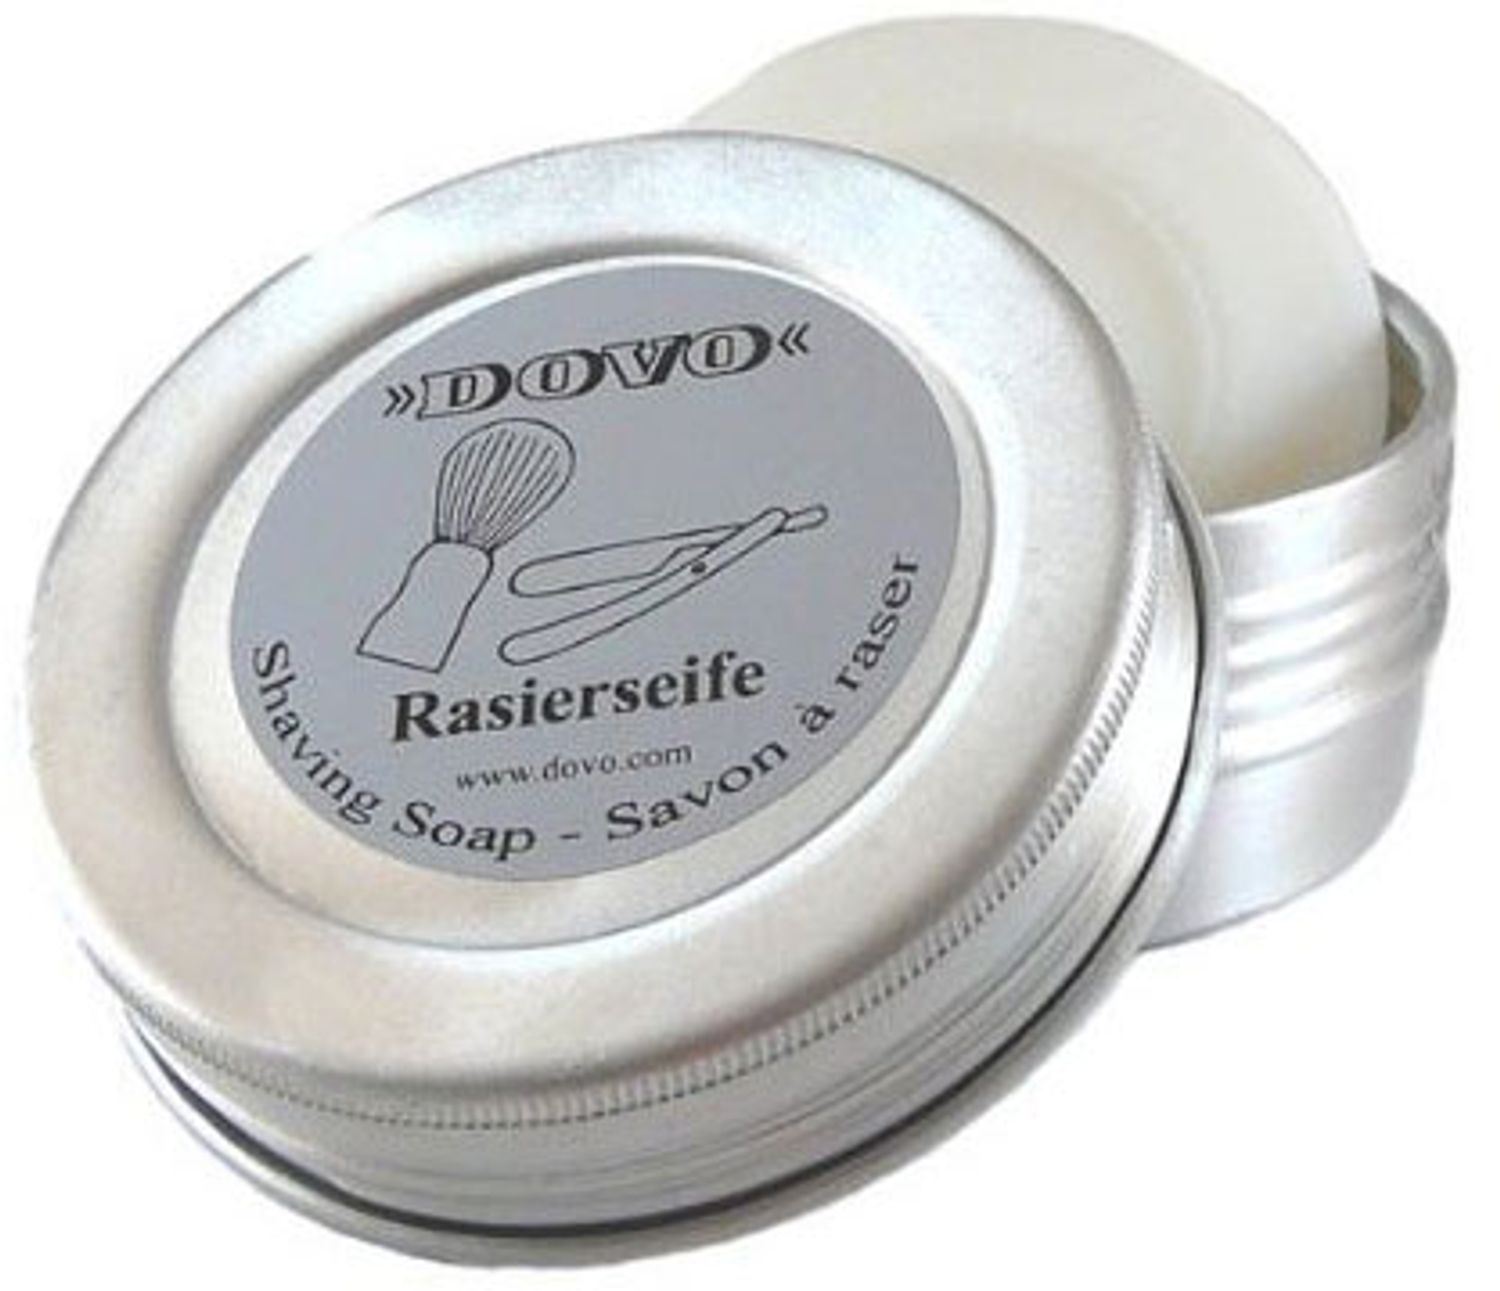 DOVO Golddachs Rasierseife Shaving Soap Aluminum Tin - KnifeCenter - 507  000 - Discontinued